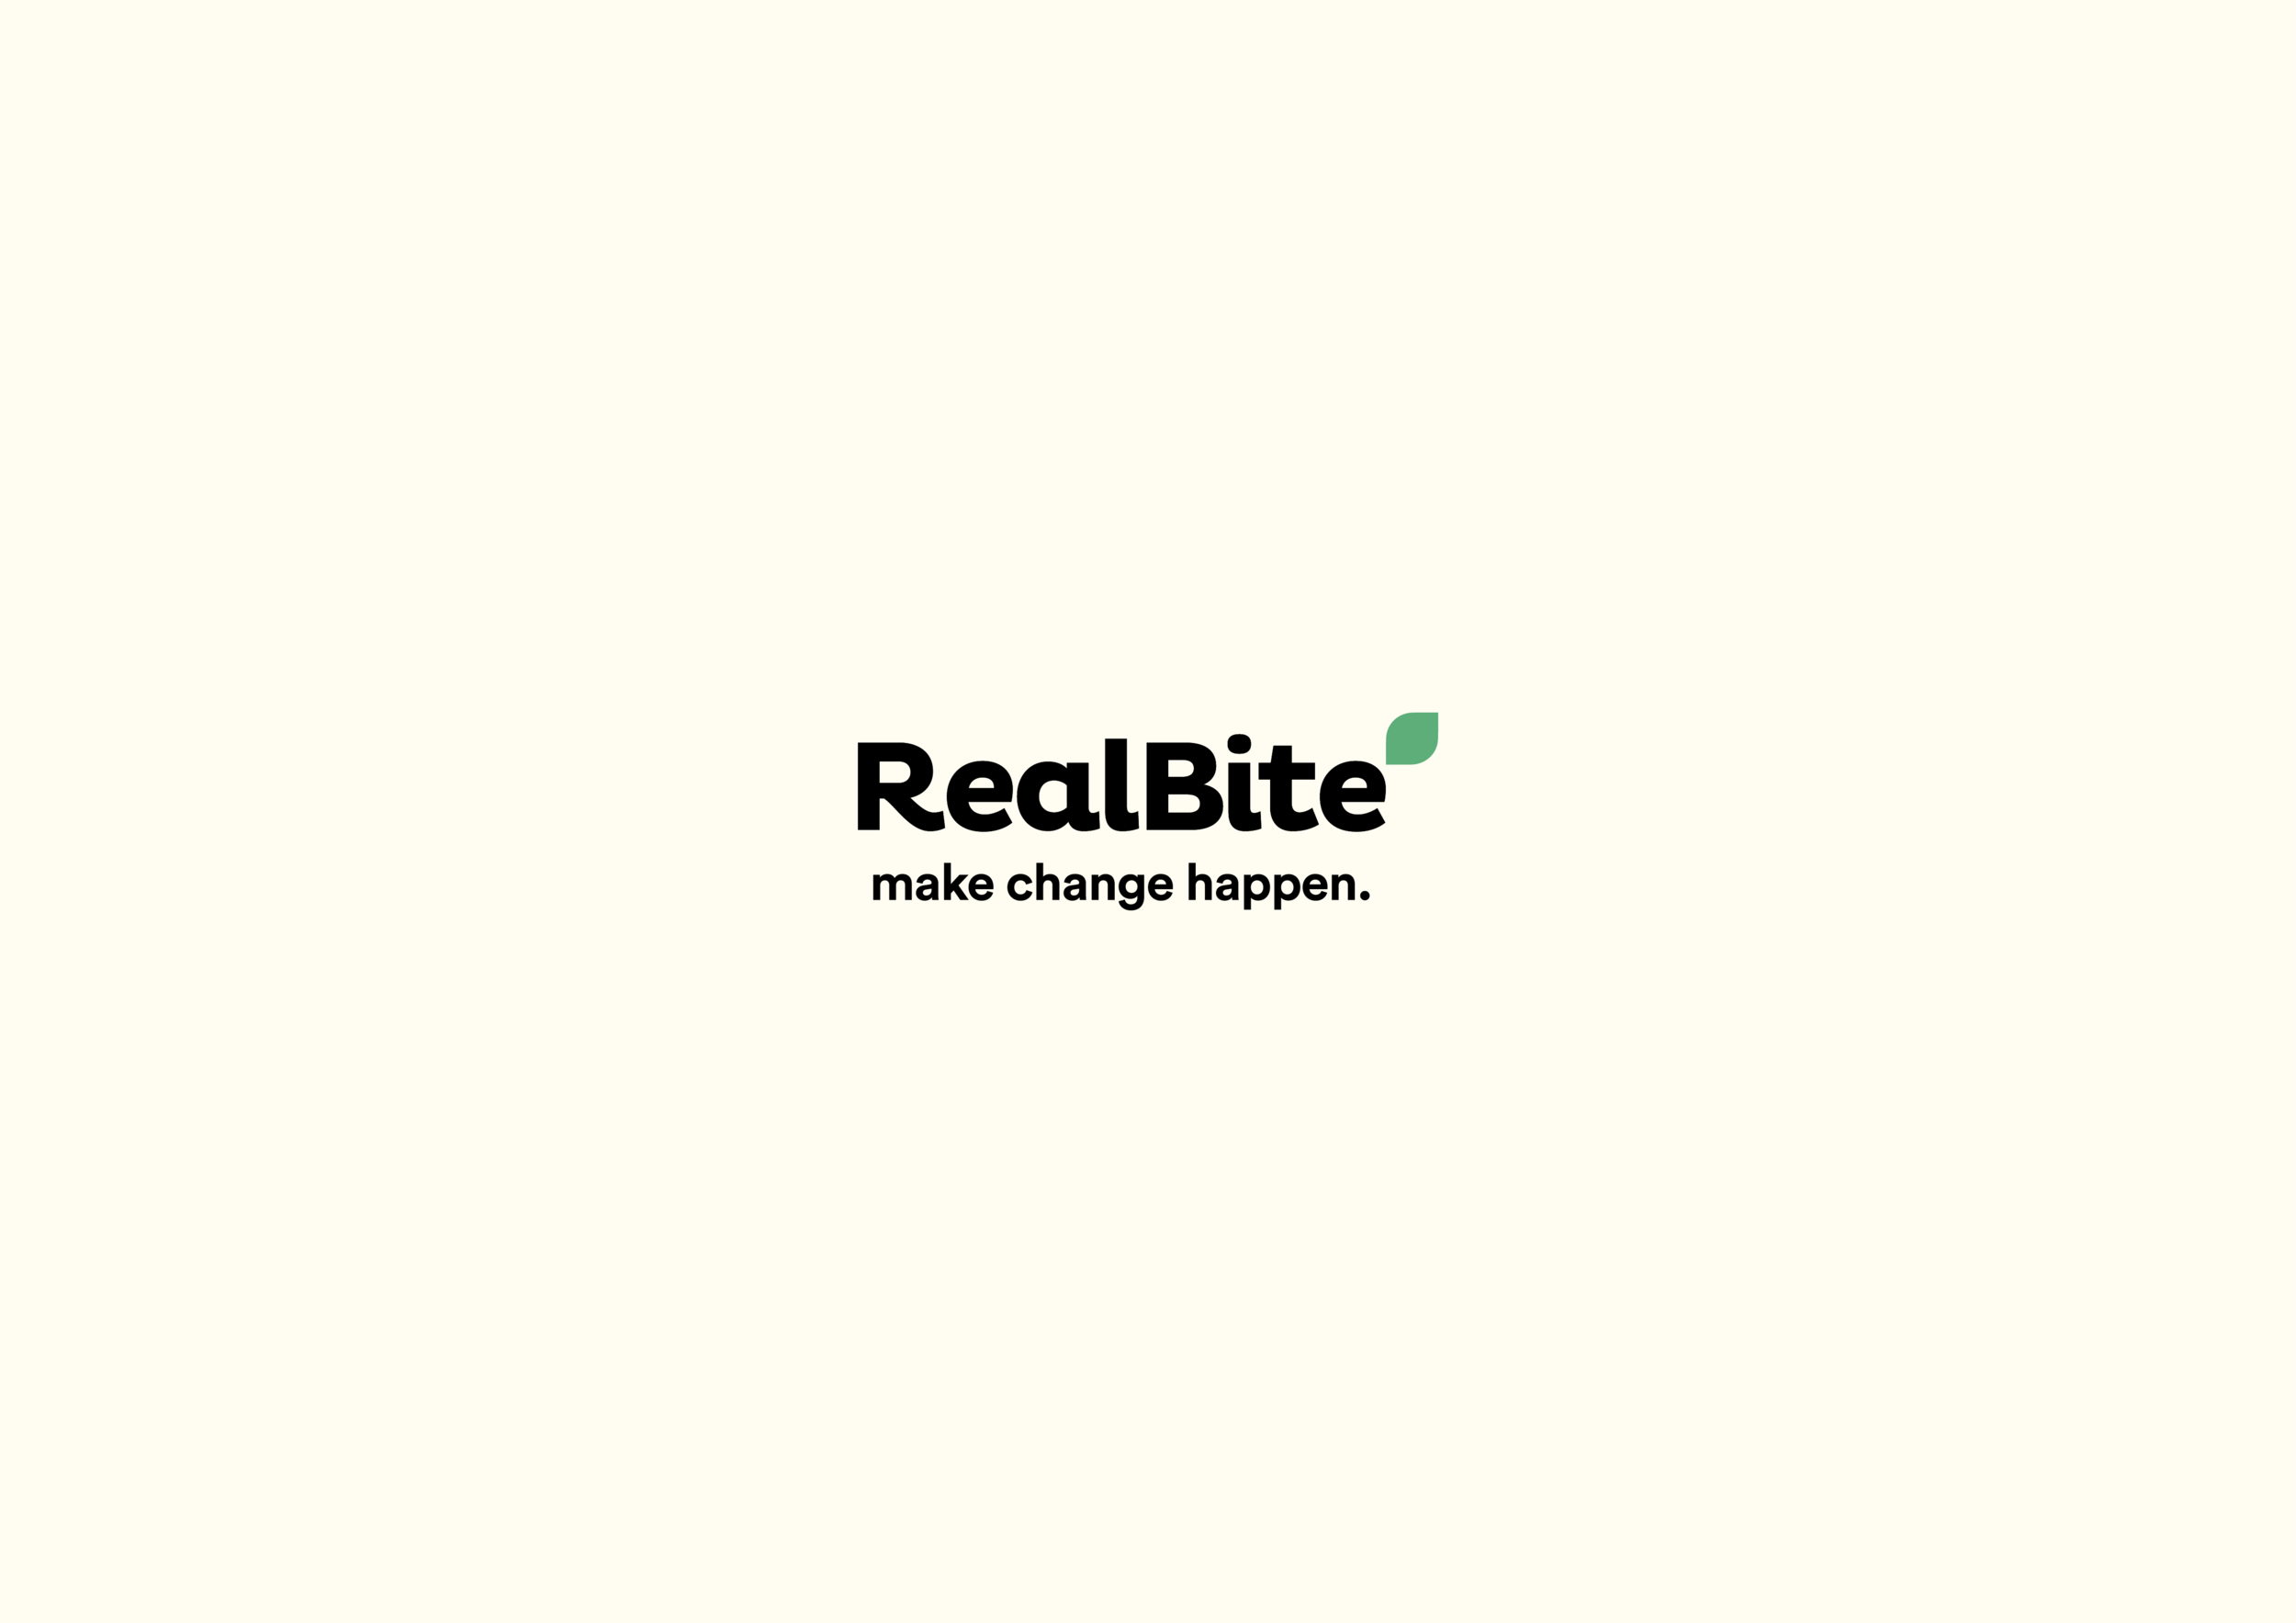 Packaging Designer London - RealBite font logo with brand tagline in light beige background